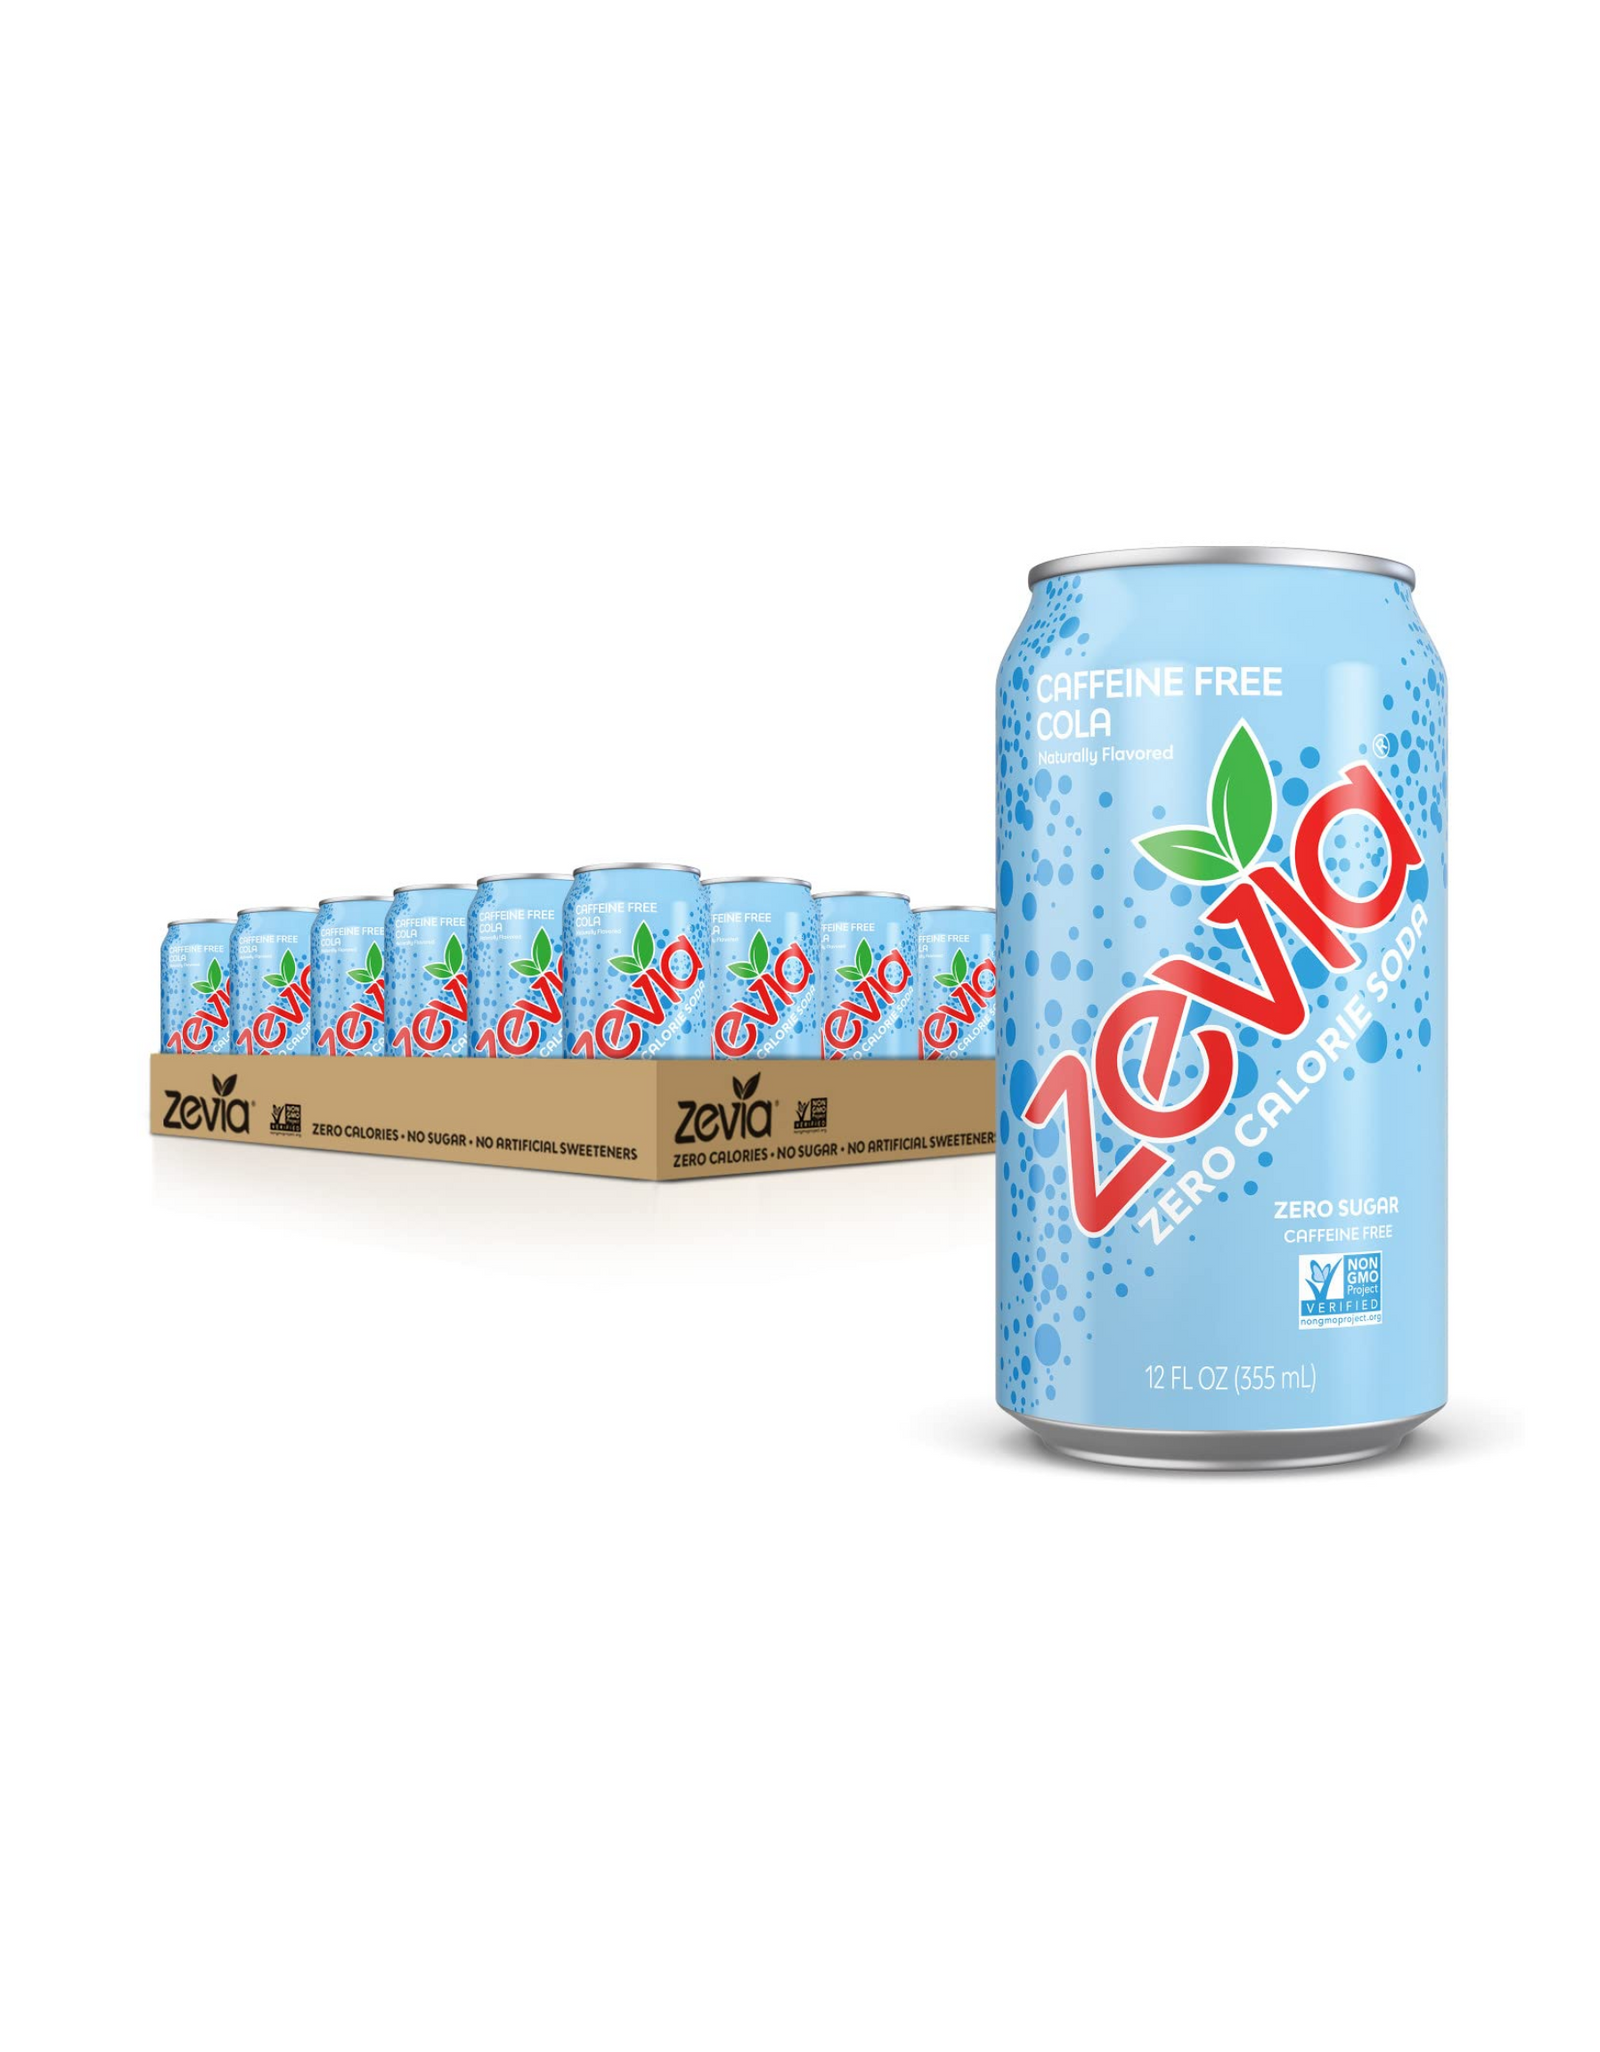 Zevia Zero Calorie Soda, Caffeine Free Cola, 12 fl oz (Pack of 24)